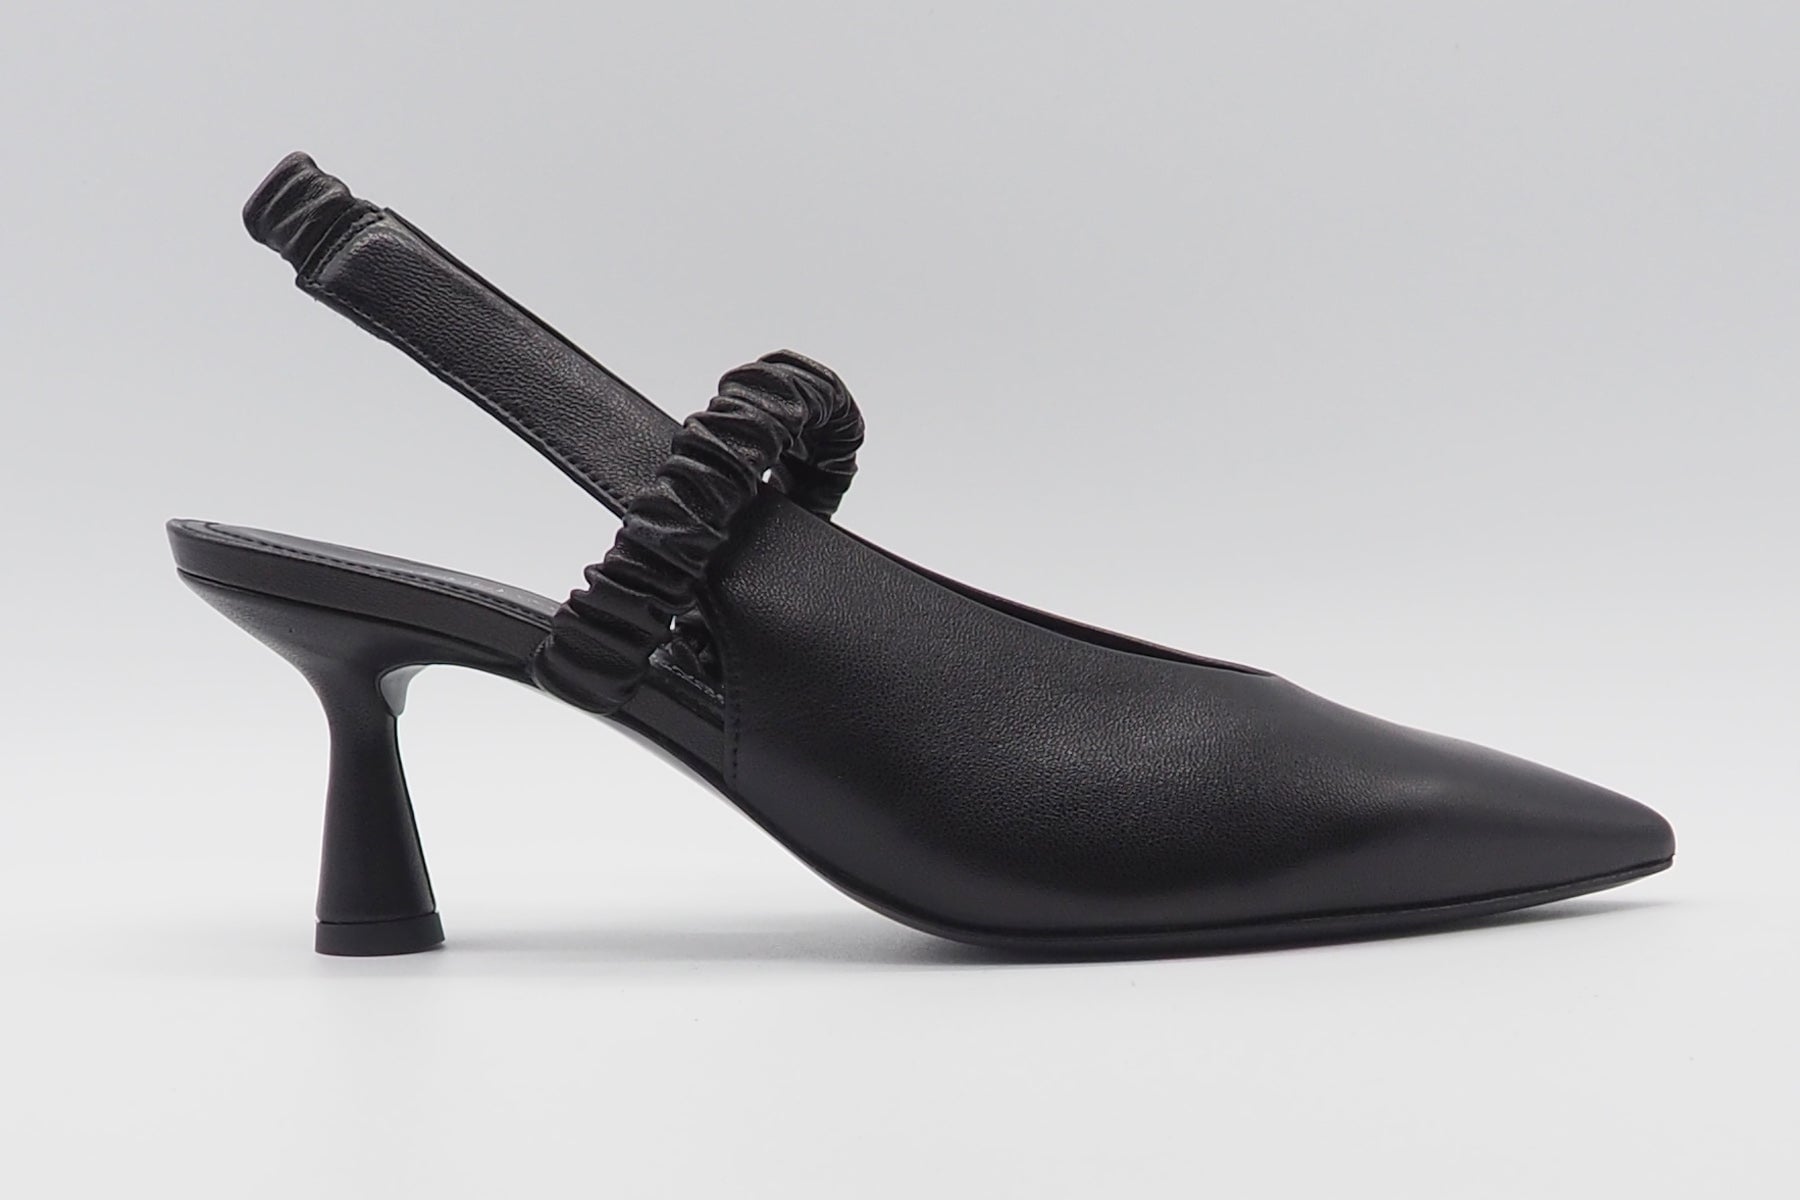 Damen Sling aus Glattleder in Schwarz mit Lederristband - Absatz 6cm Damen Pumps & Slings Kennel & Schmenger 